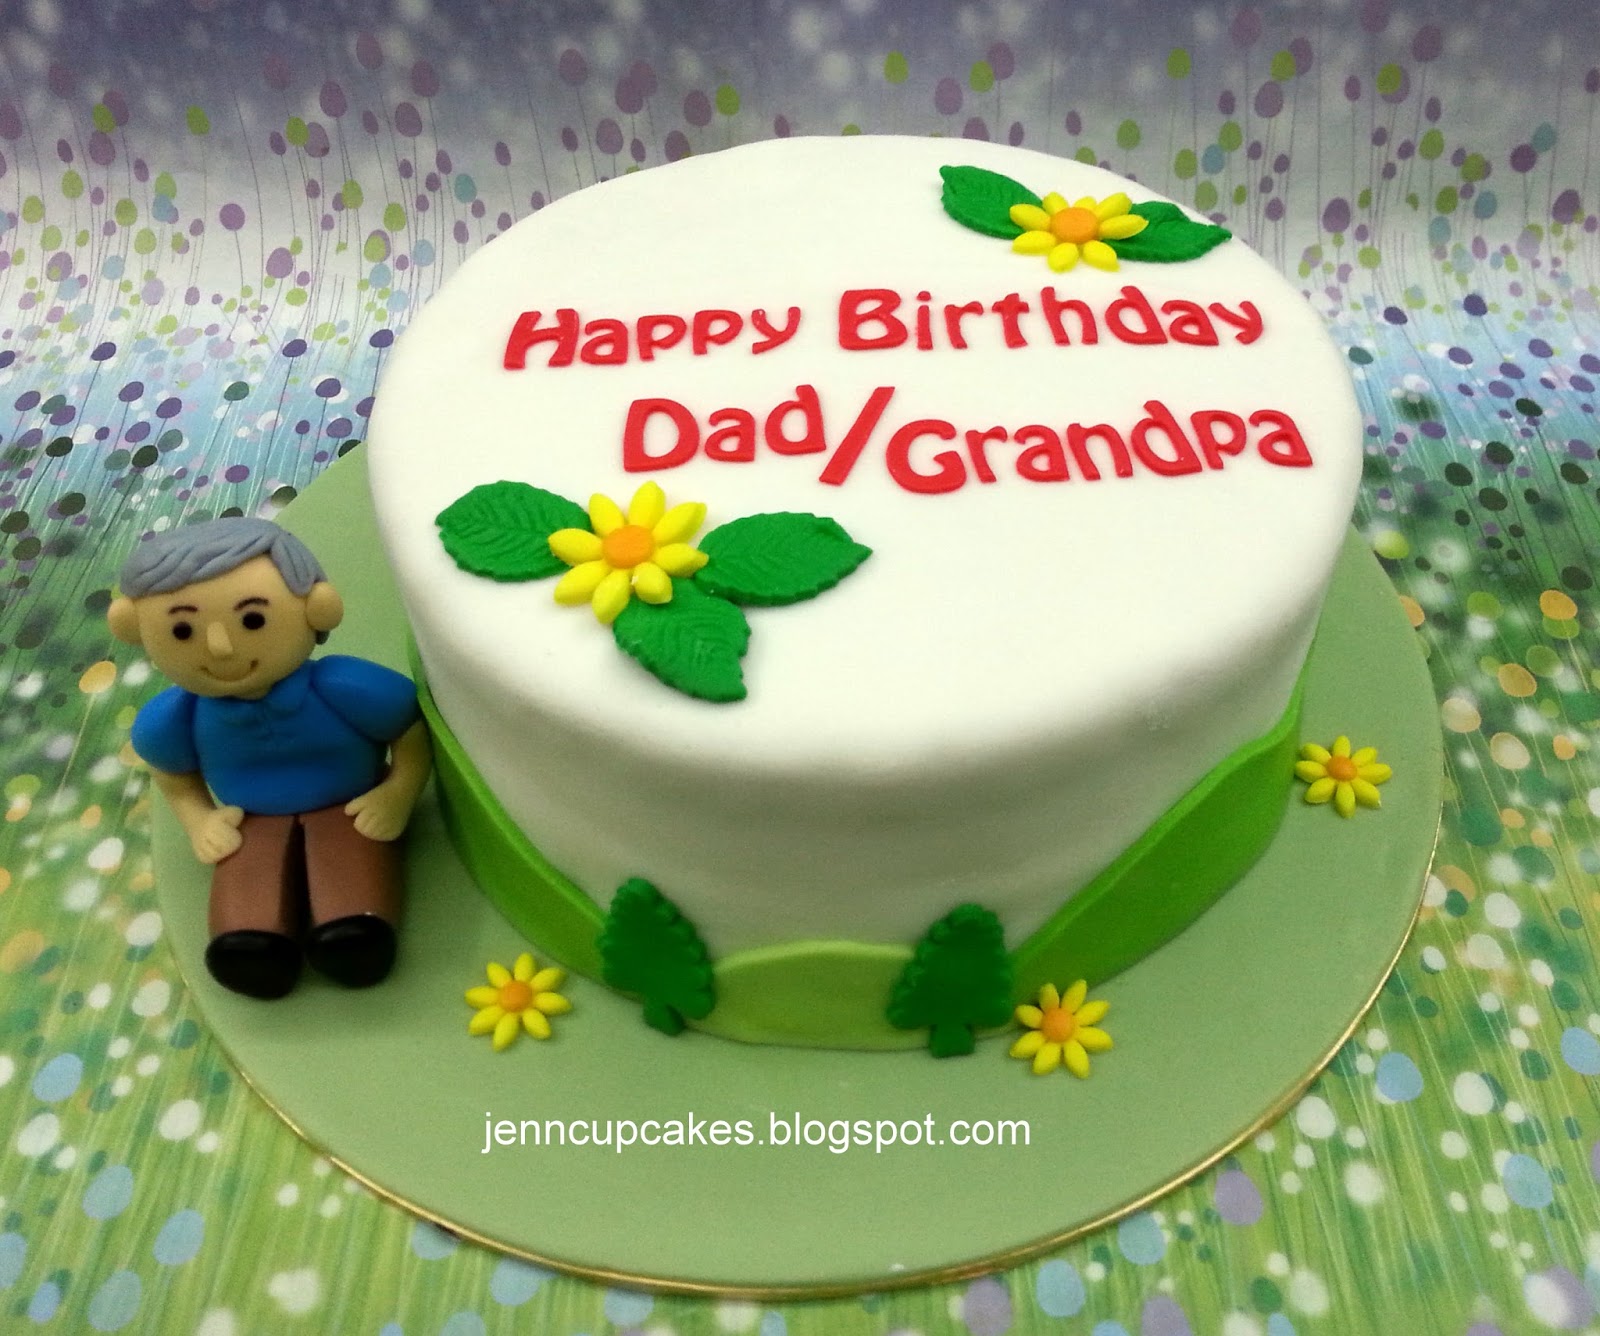 Order Cake Online | Fondant Cake for Grandparents | Winni.in | Winni.in